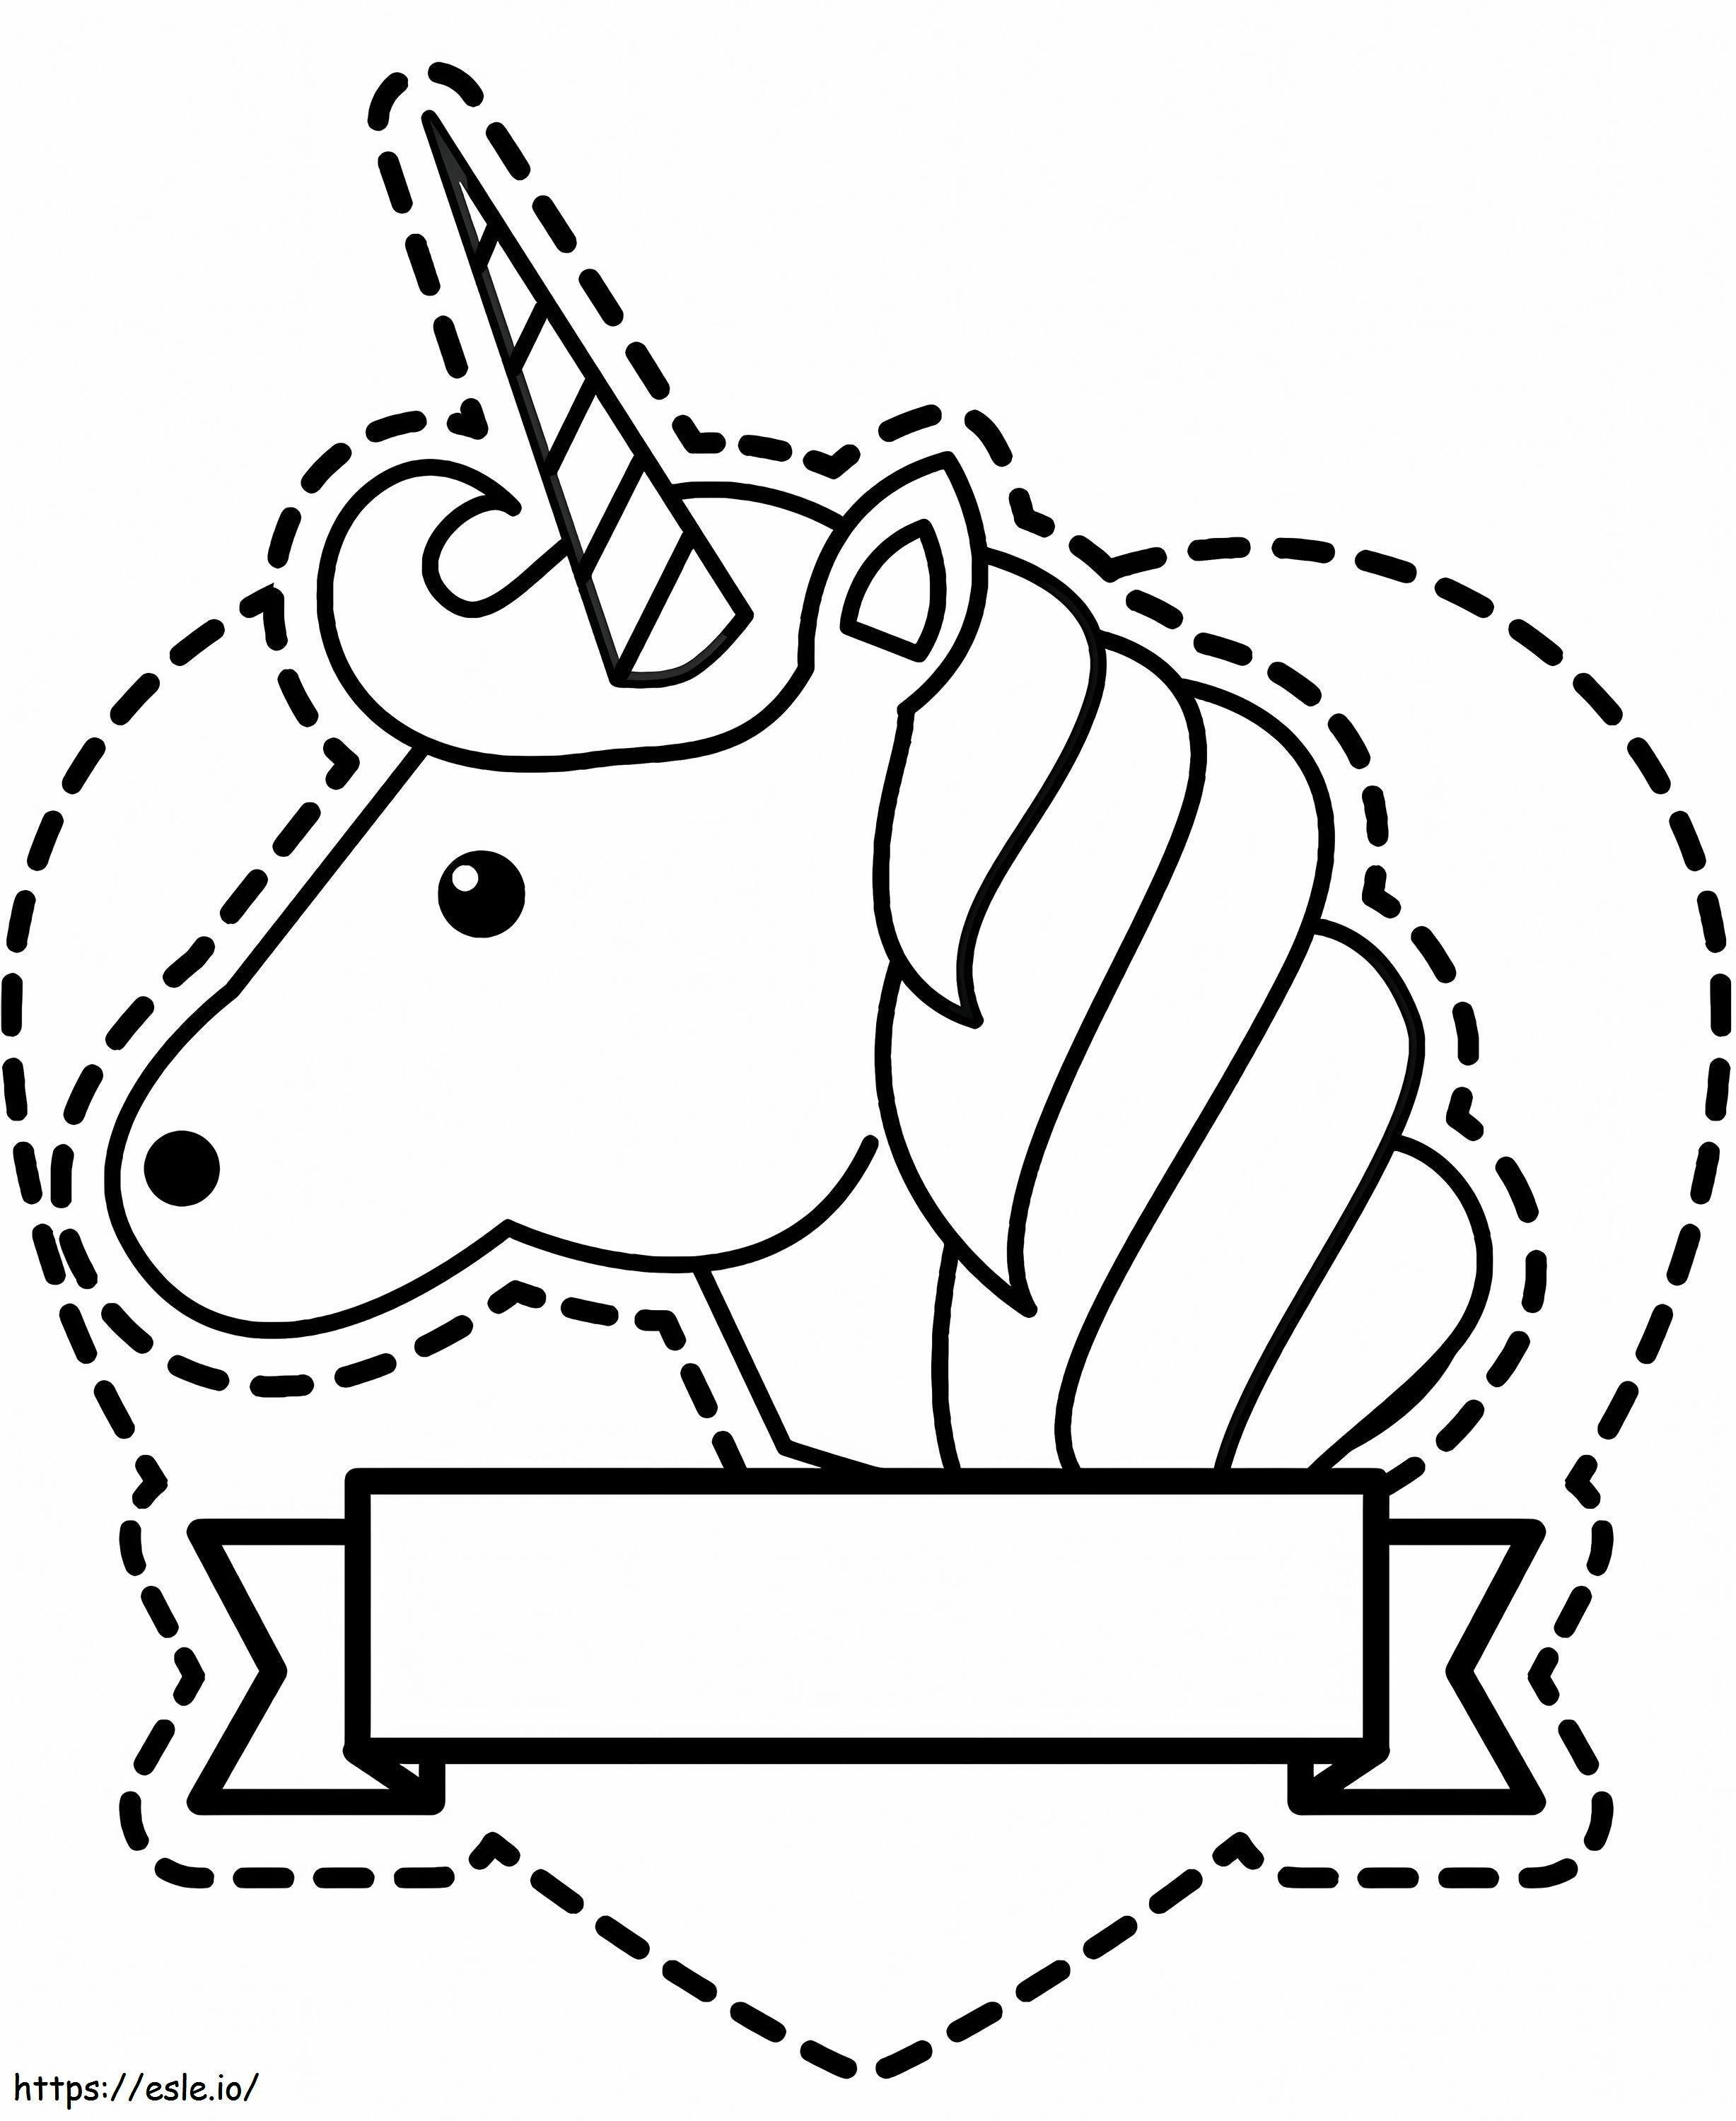 1564449803 Sticker Unicorn A4 coloring page